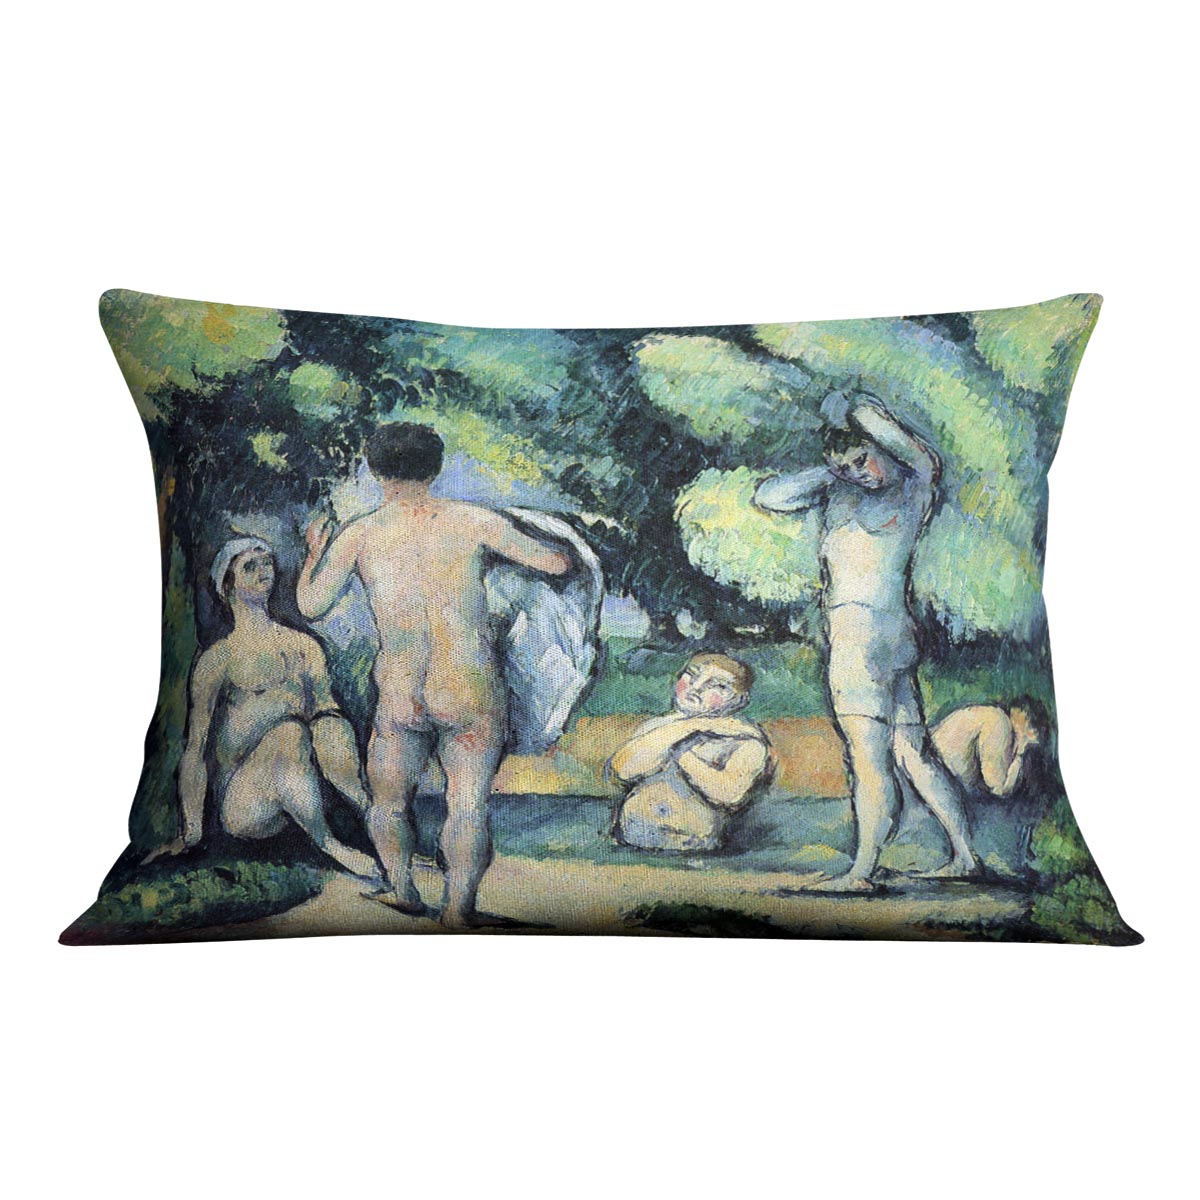 Bathers 3 by Cezanne Cushion